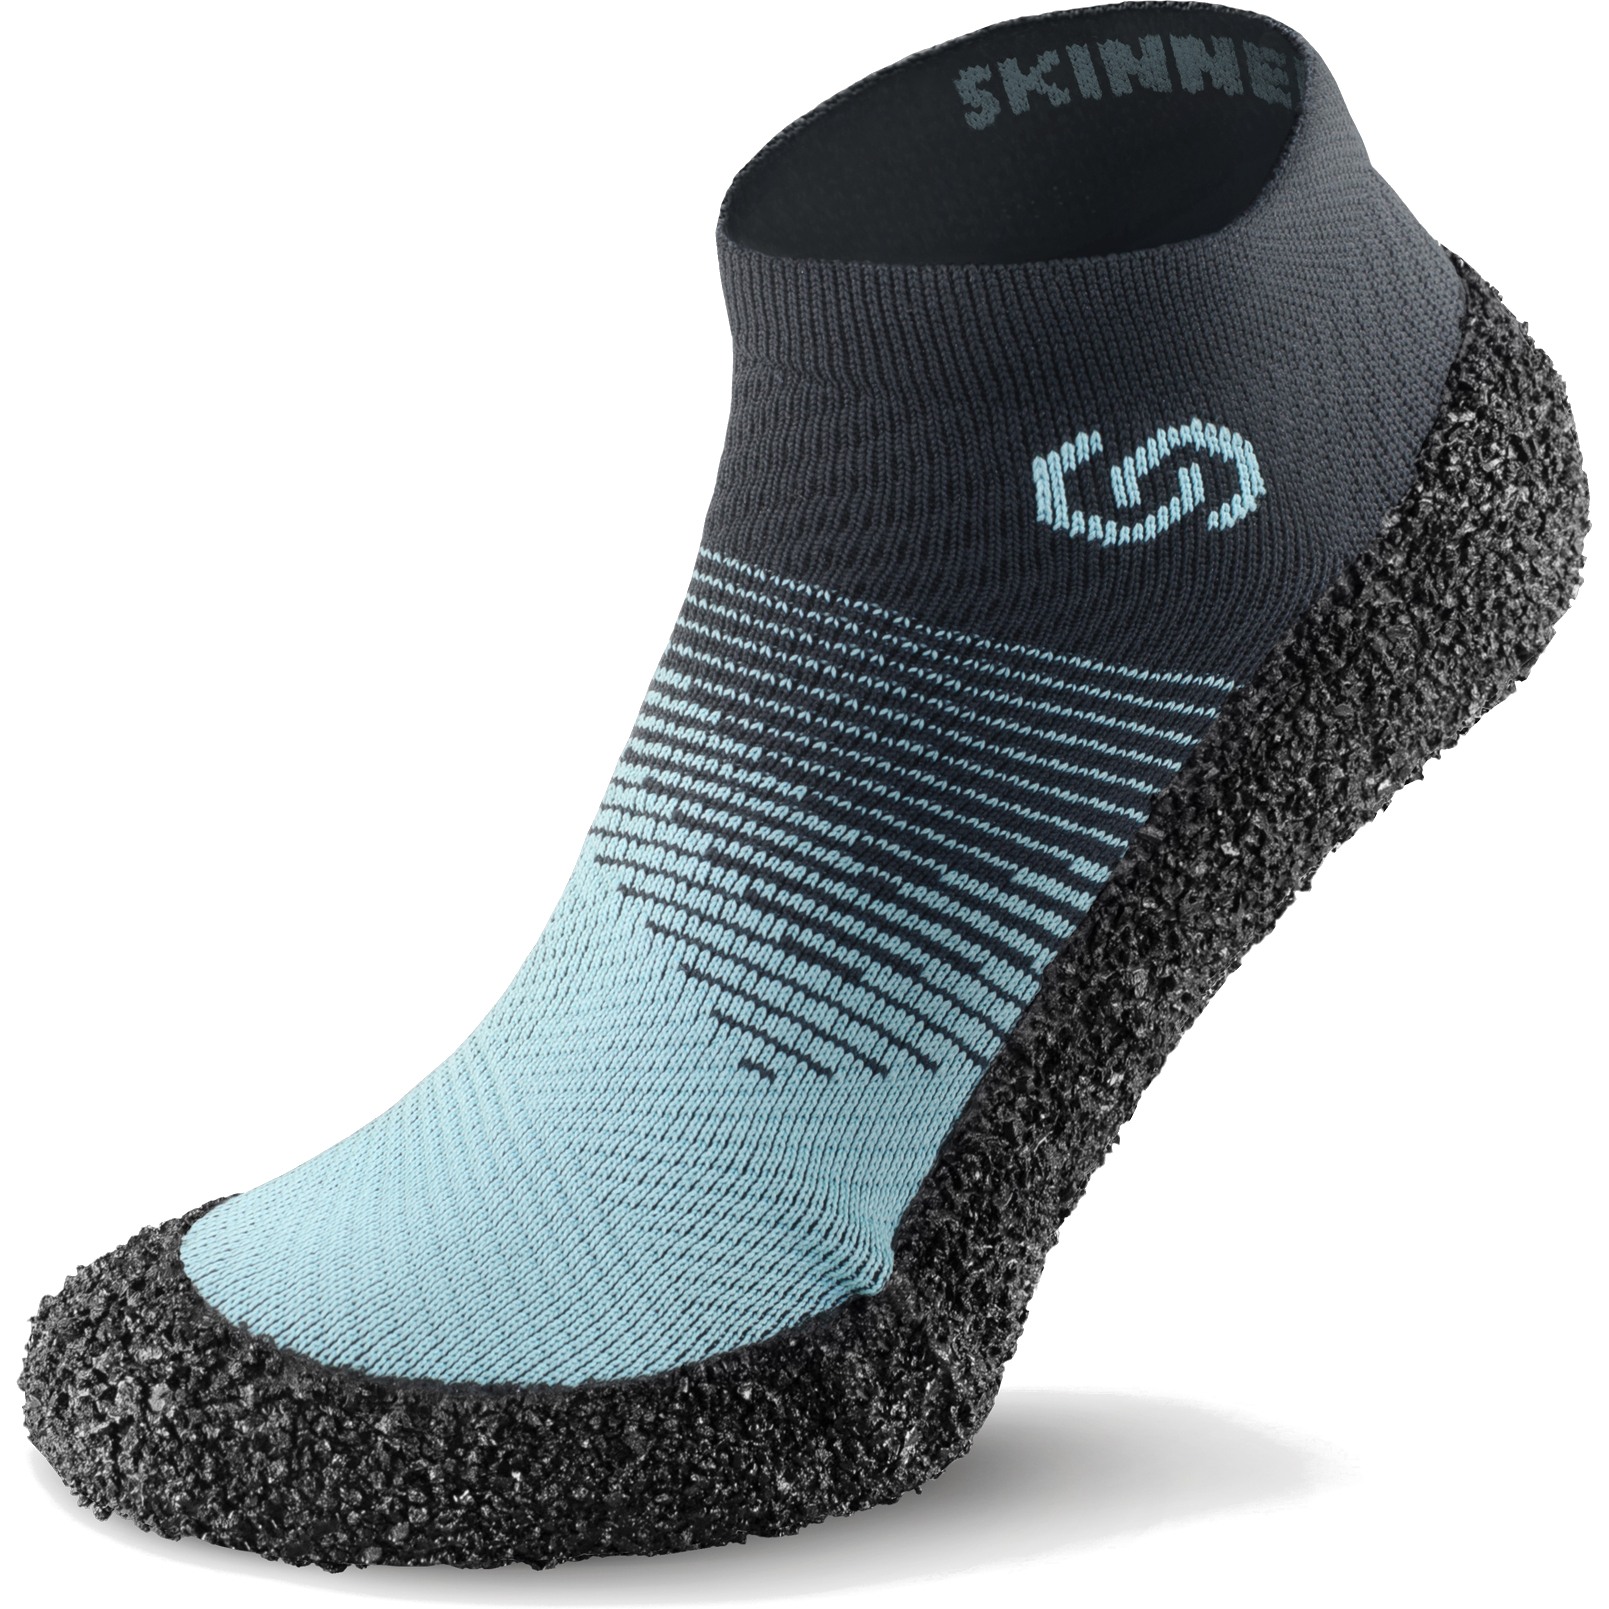 Productfoto van Skinners Sock Shoes 2.0 - aqua